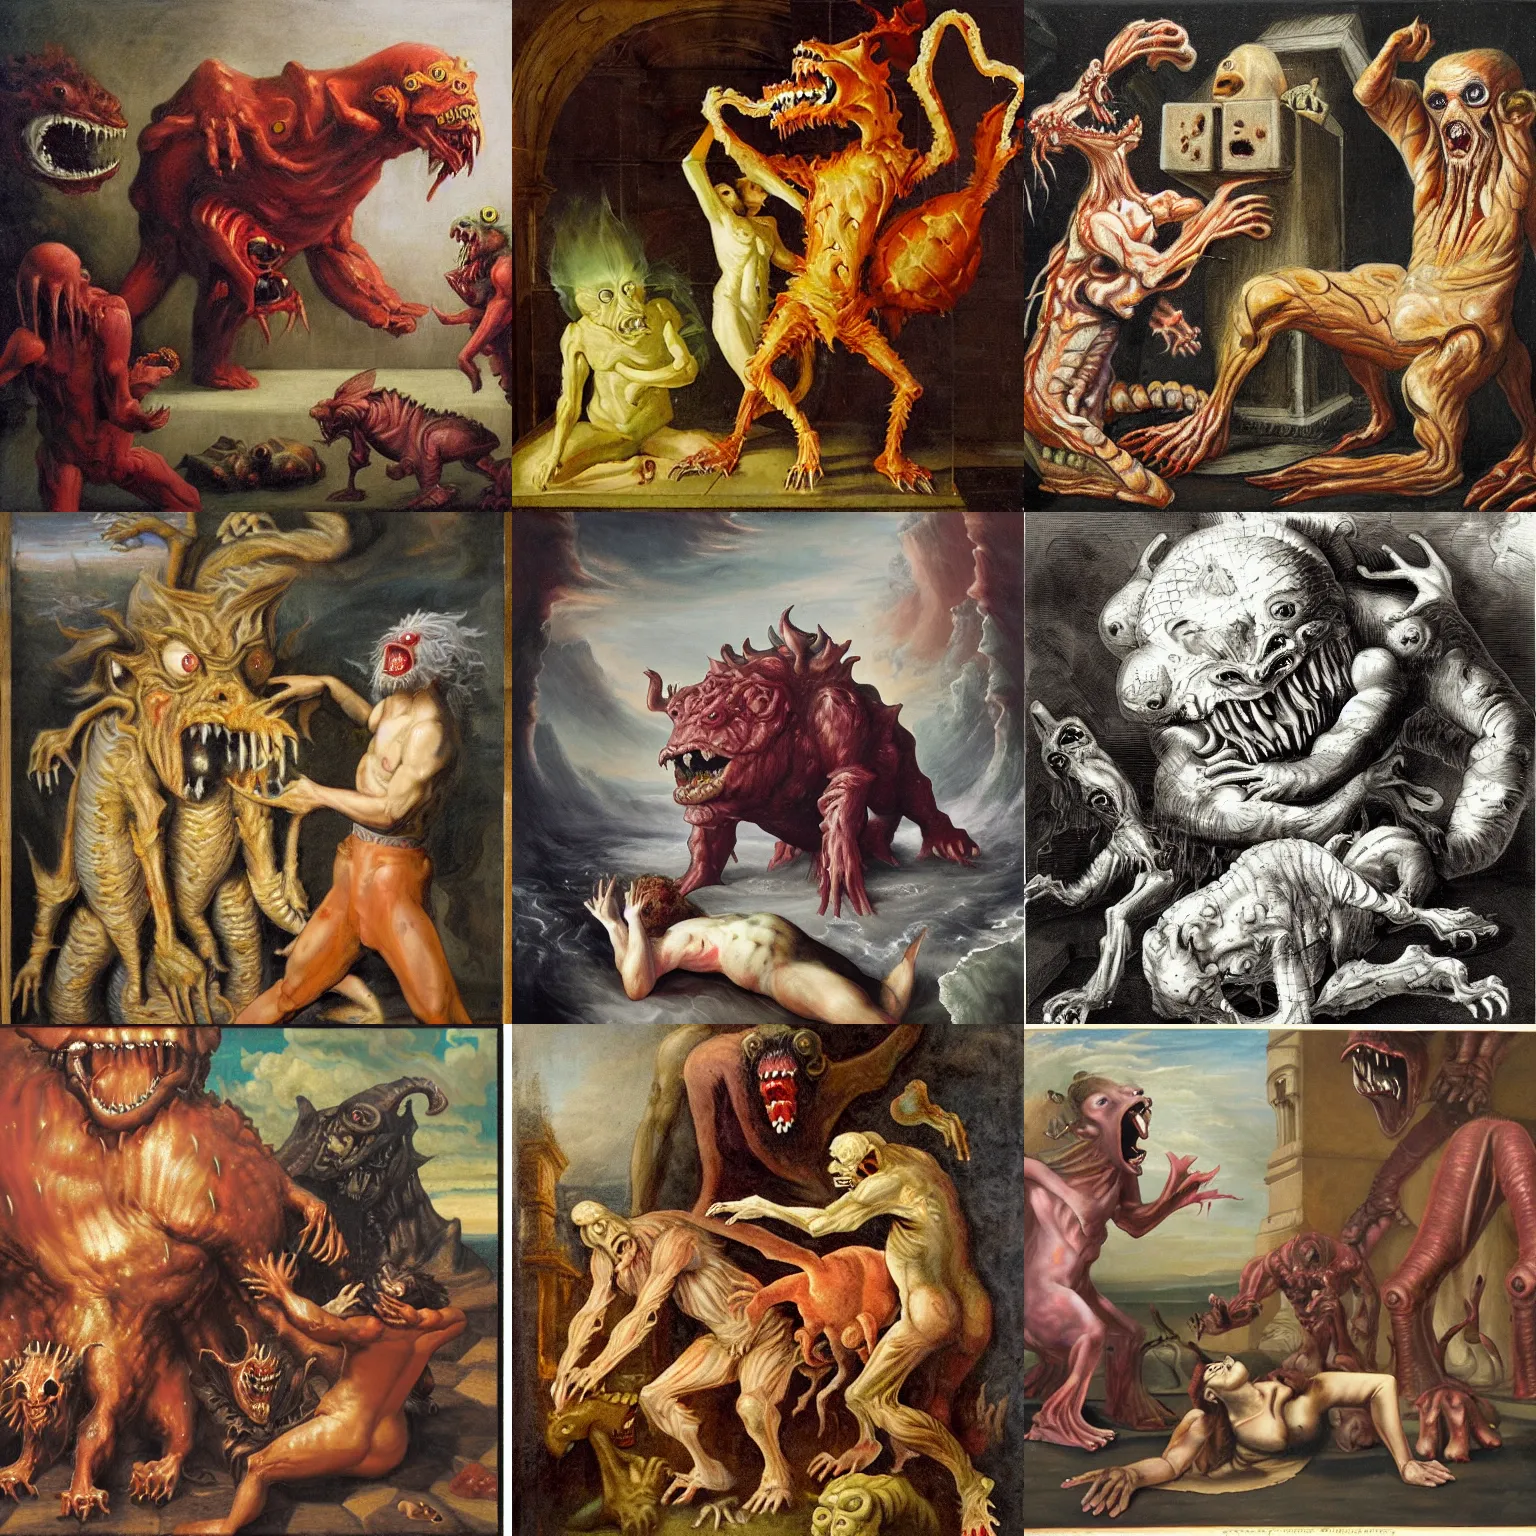 Prompt: flesh beast, gelating cube creature, horrifying monster, baroque painting